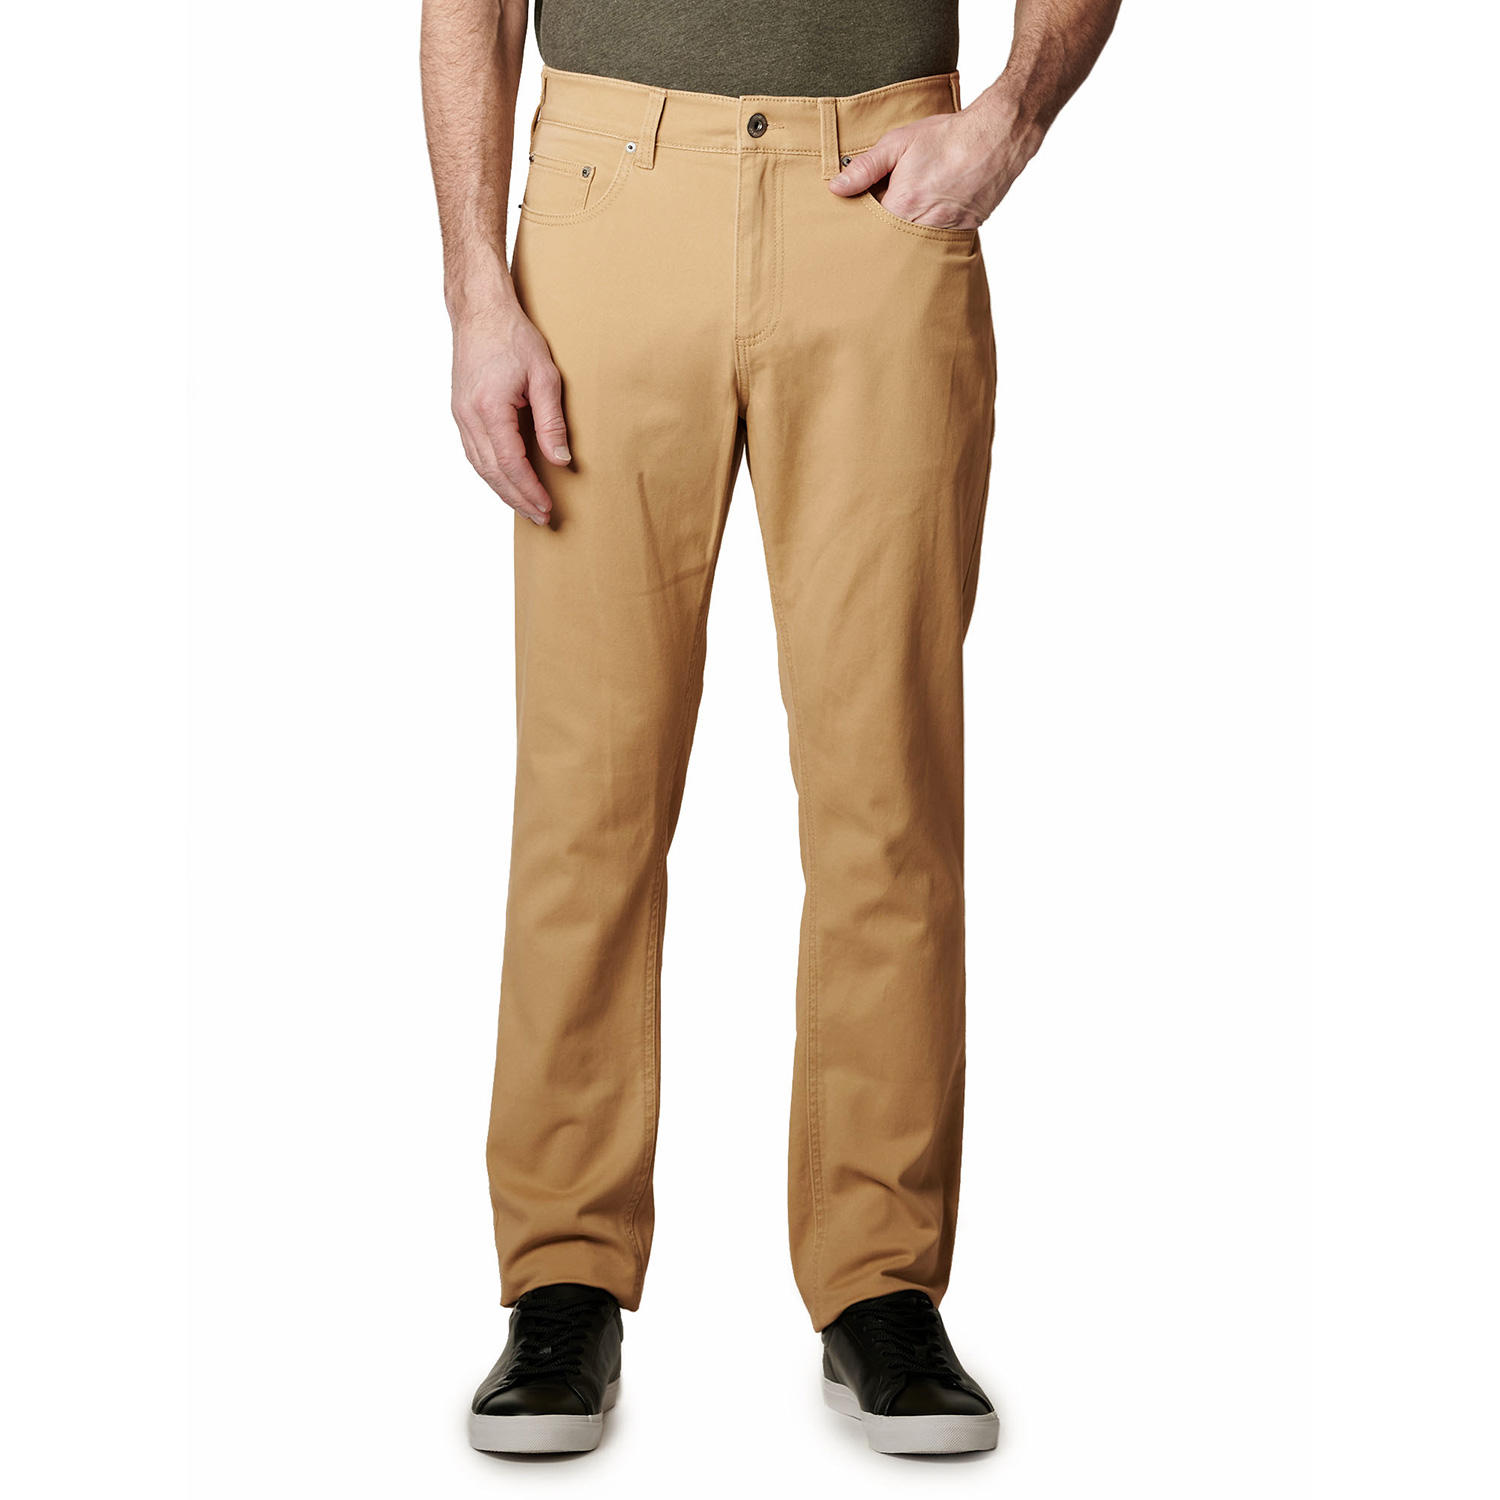 IRON Clothing PATRIOT Comfort Flex Waistband 5 Pocket Stretch Twill Pant - Desert Camel 30x30